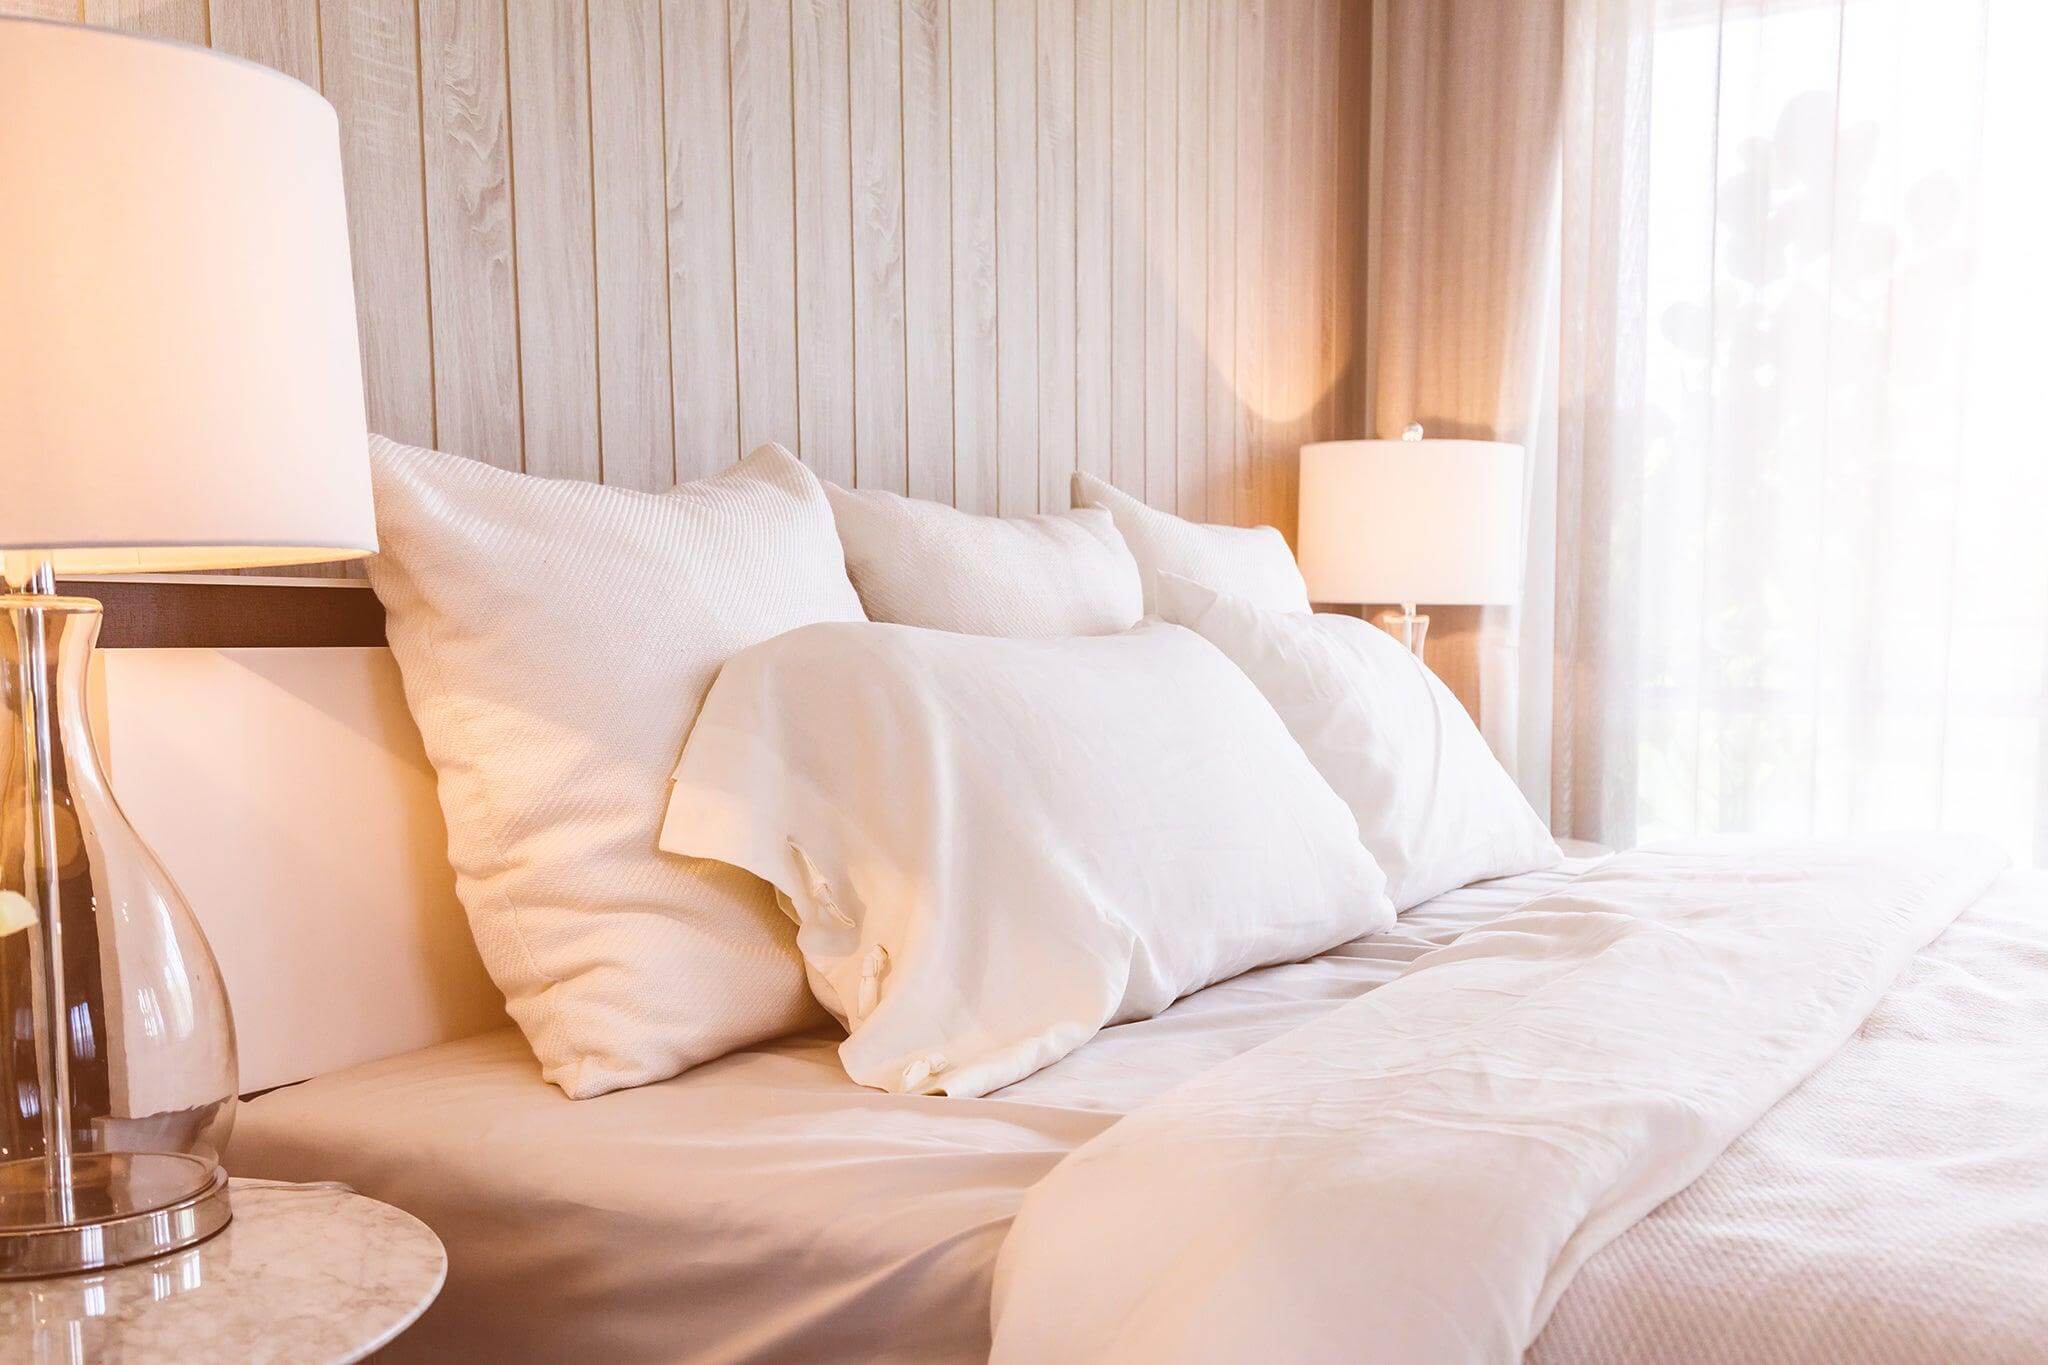 Wool bedding and regenerative sleep benefits 🌙🌙